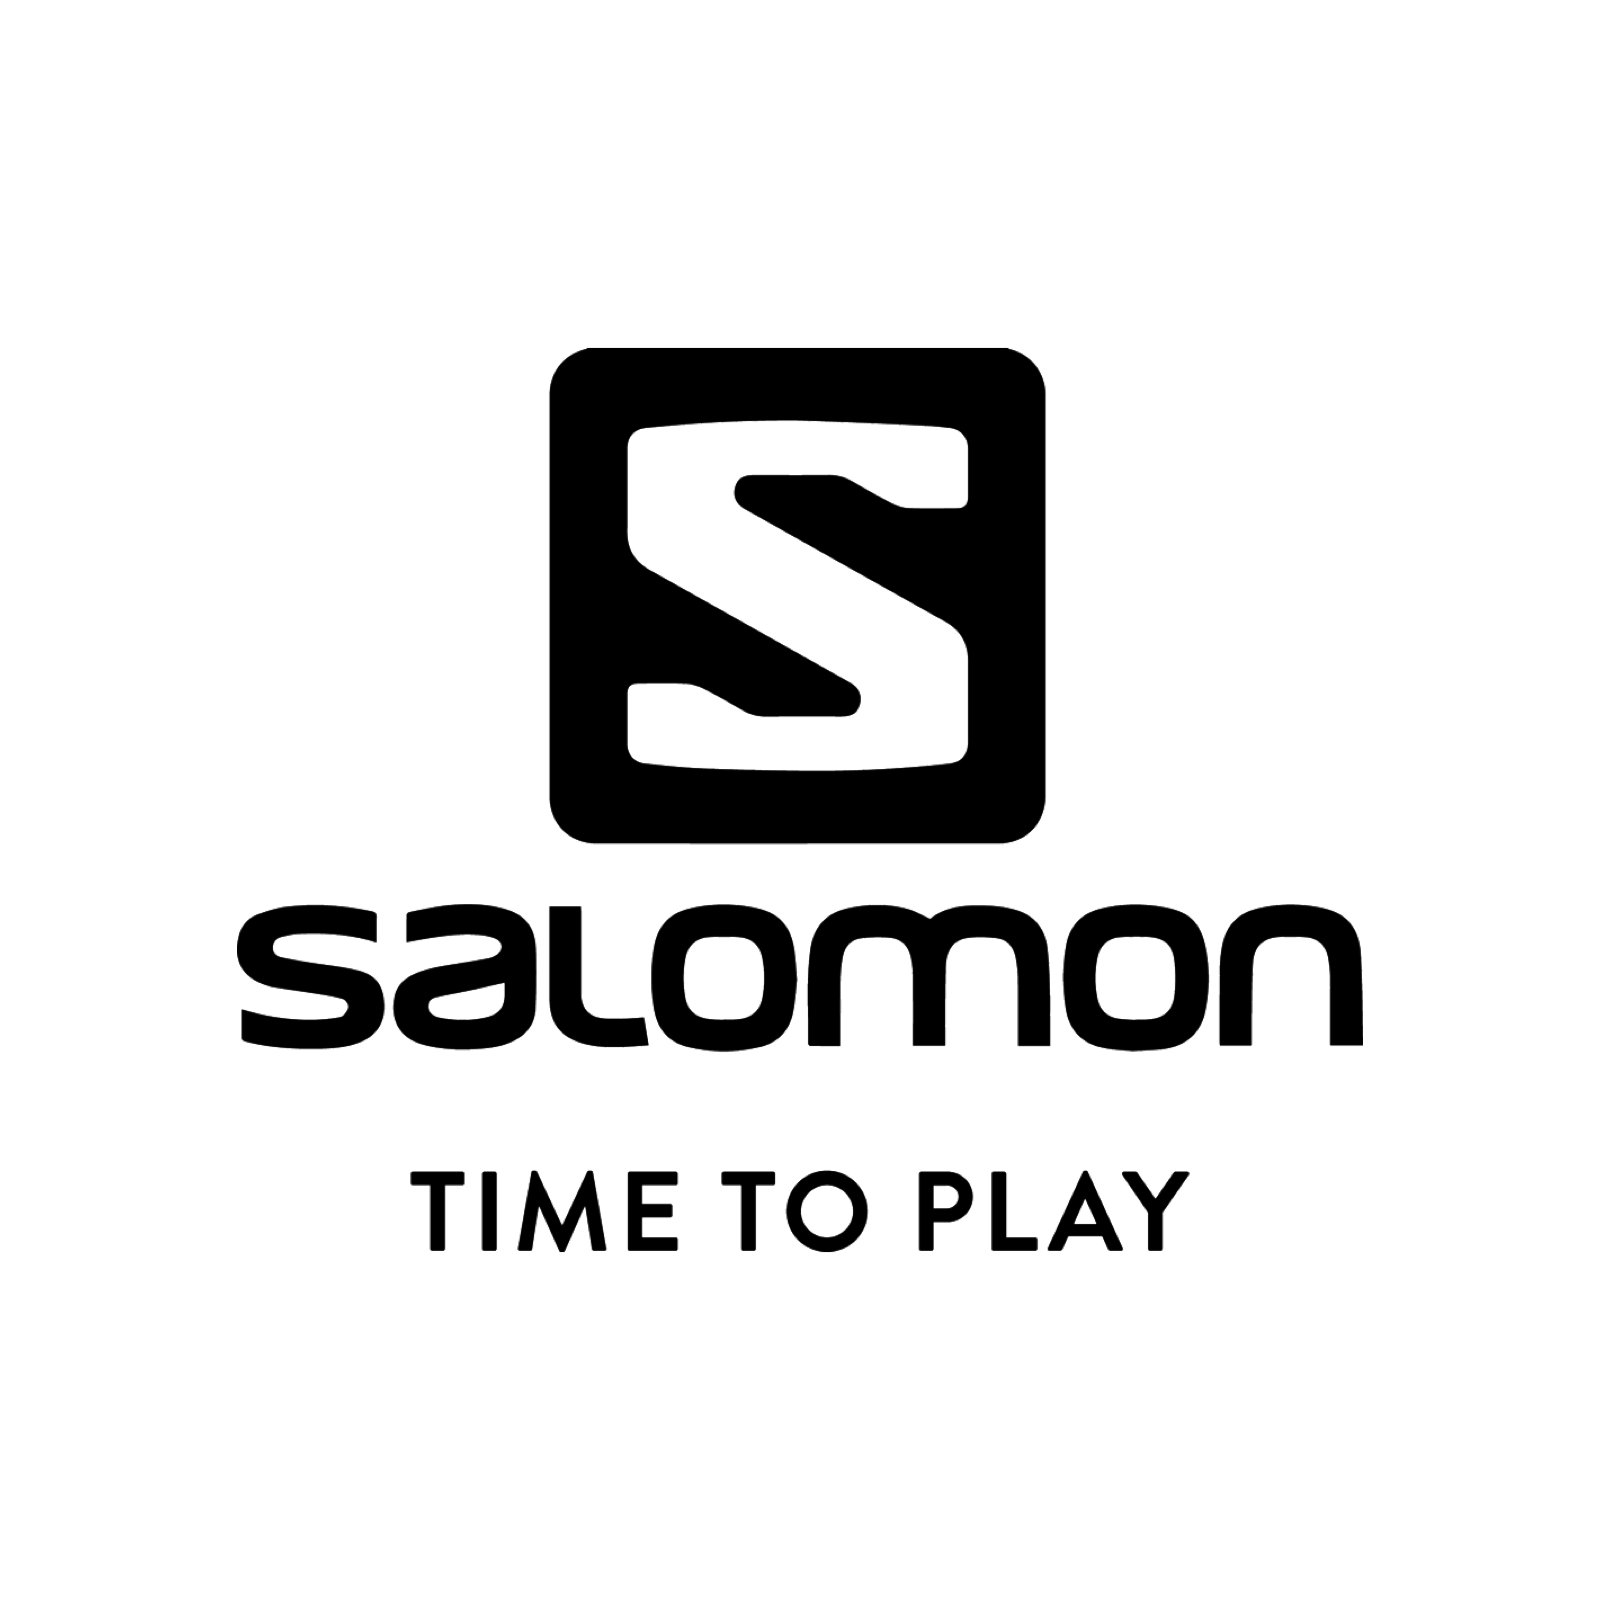 7 Salomon